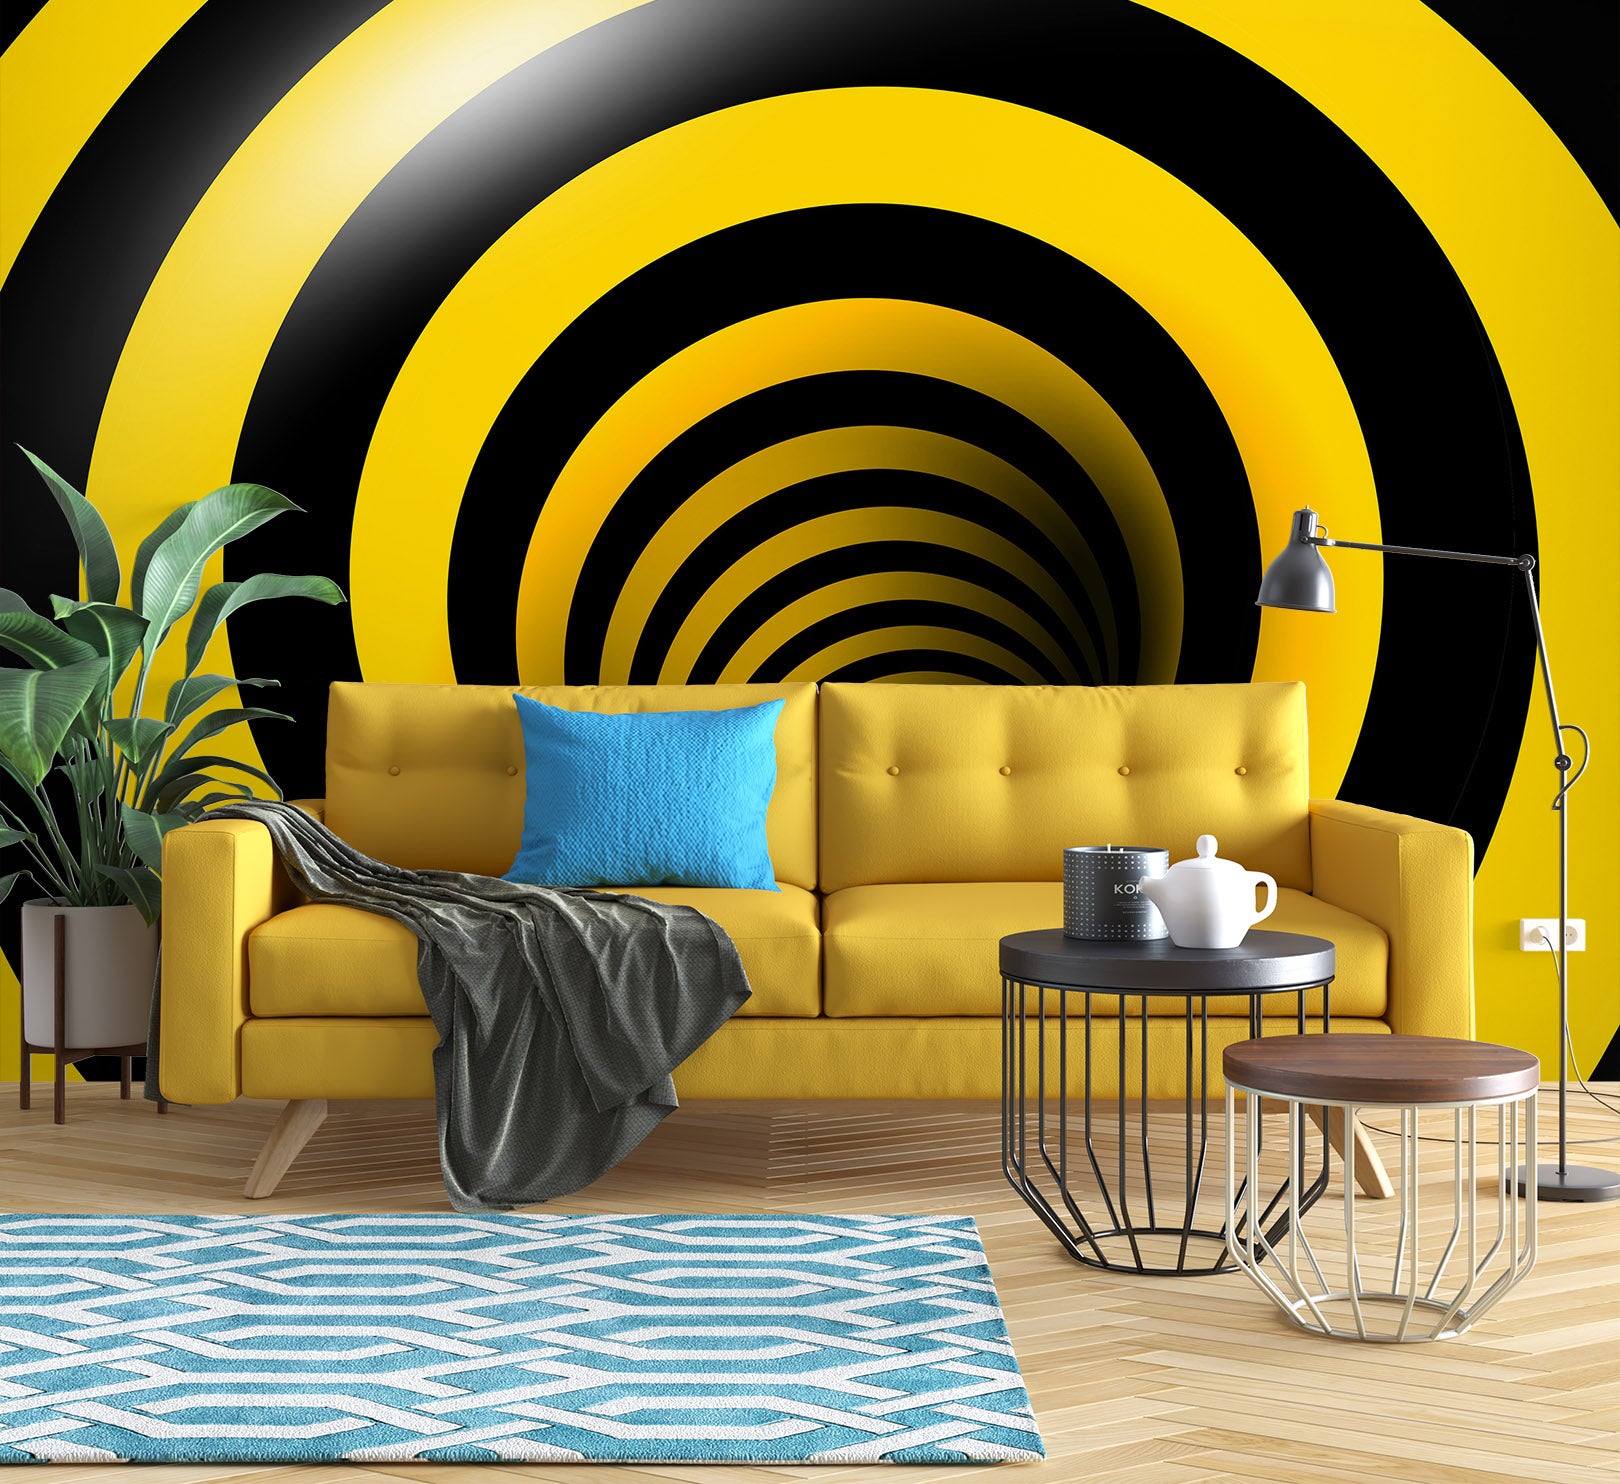 3D Black Yellow Vortex 57159 Wall Murals